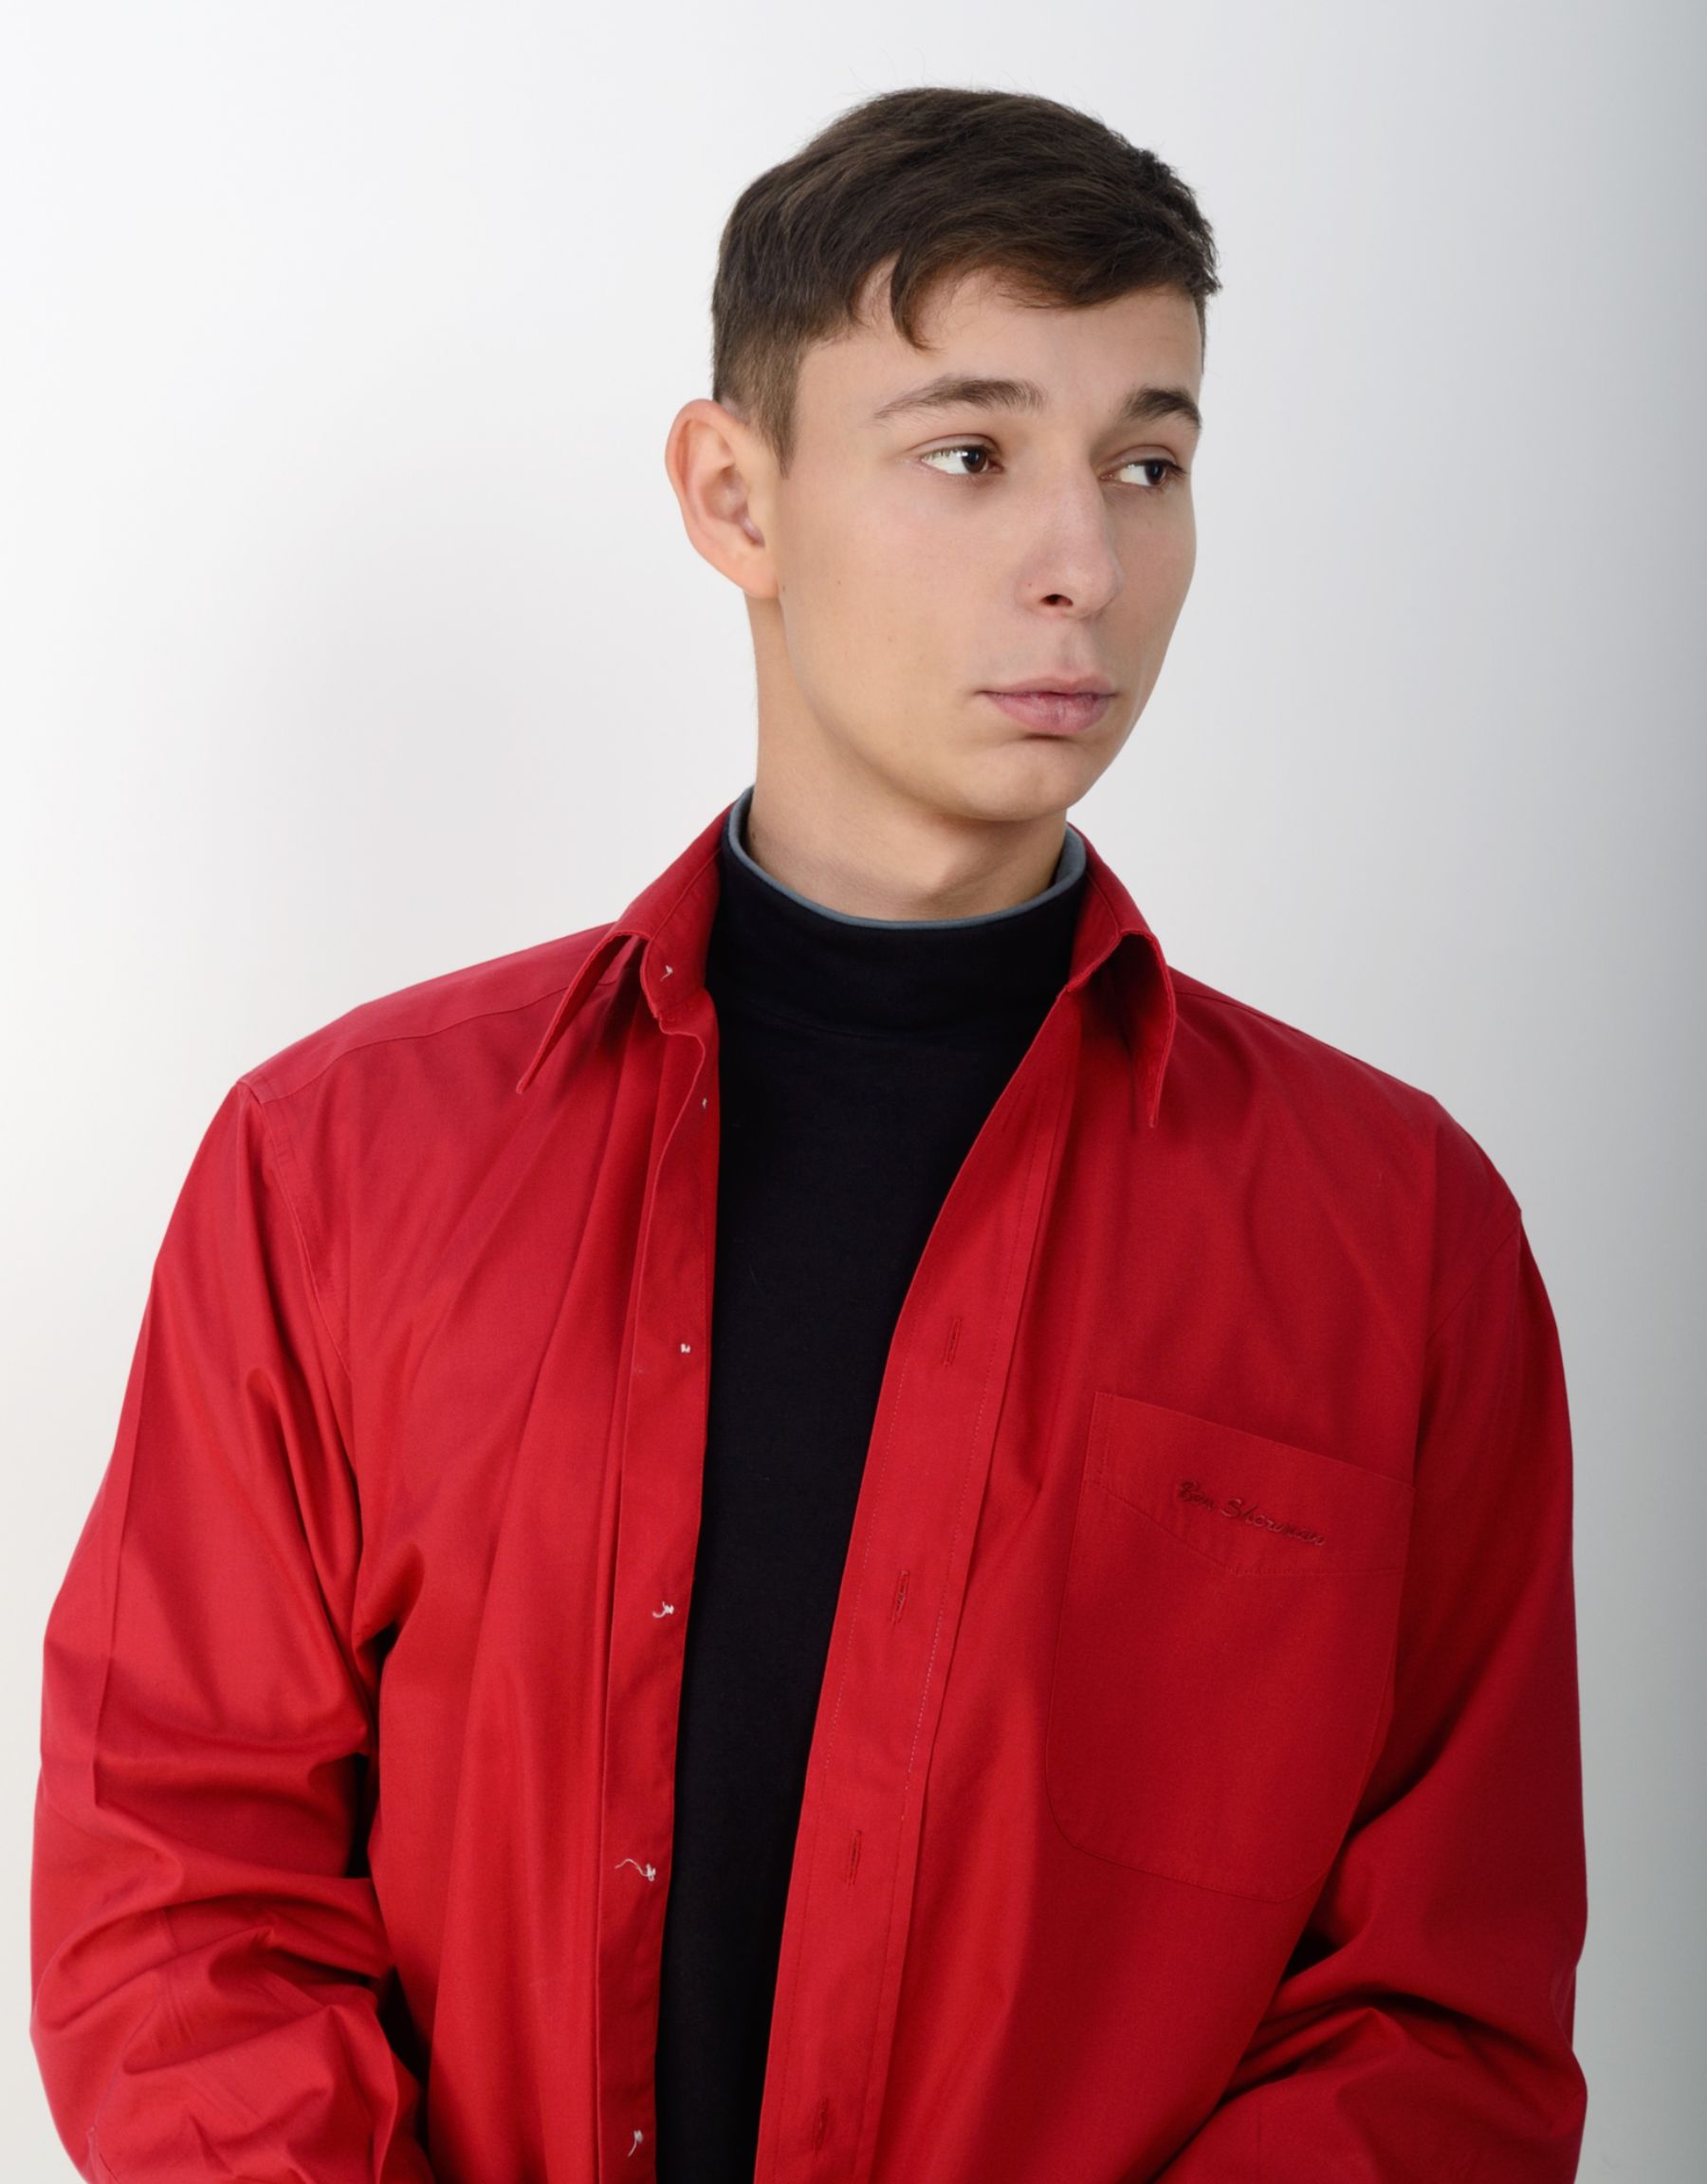 Man wearing a red jacket